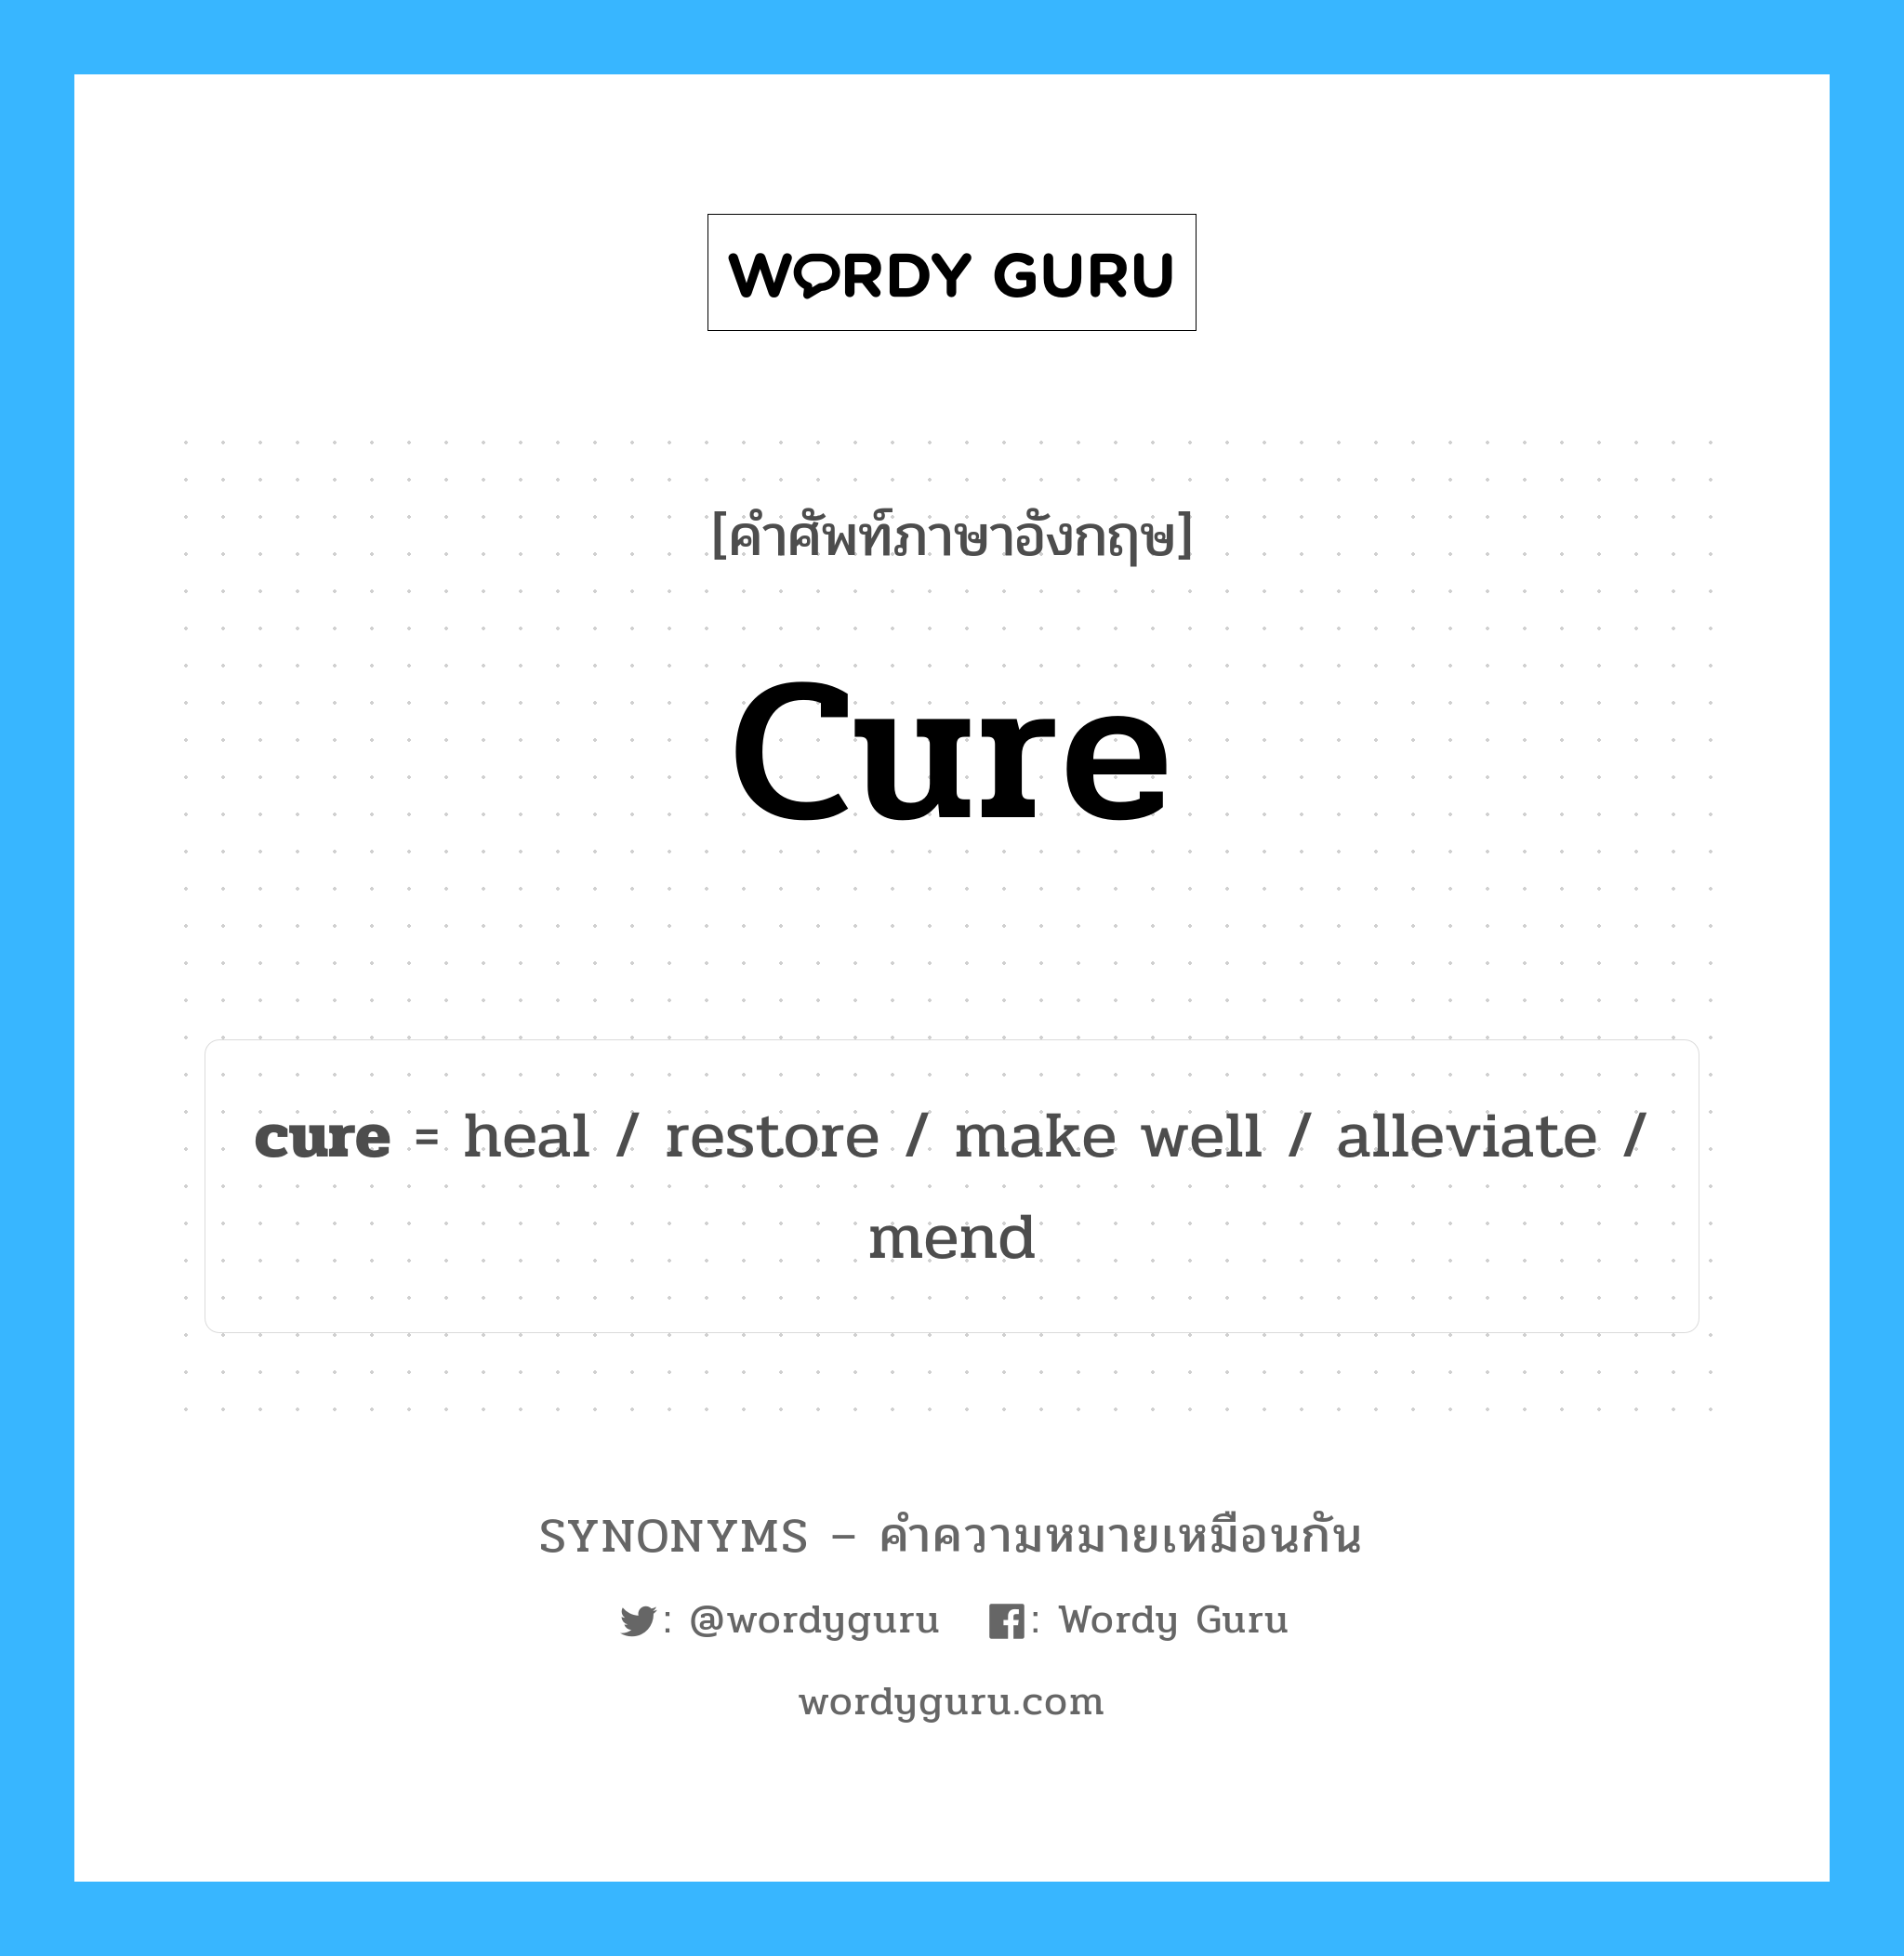 restore เป็นหนึ่งใน mend และมีคำอื่น ๆ อีกดังนี้, คำศัพท์ภาษาอังกฤษ restore ความหมายคล้ายกันกับ cure แปลว่า การคืนค่า หมวด cure